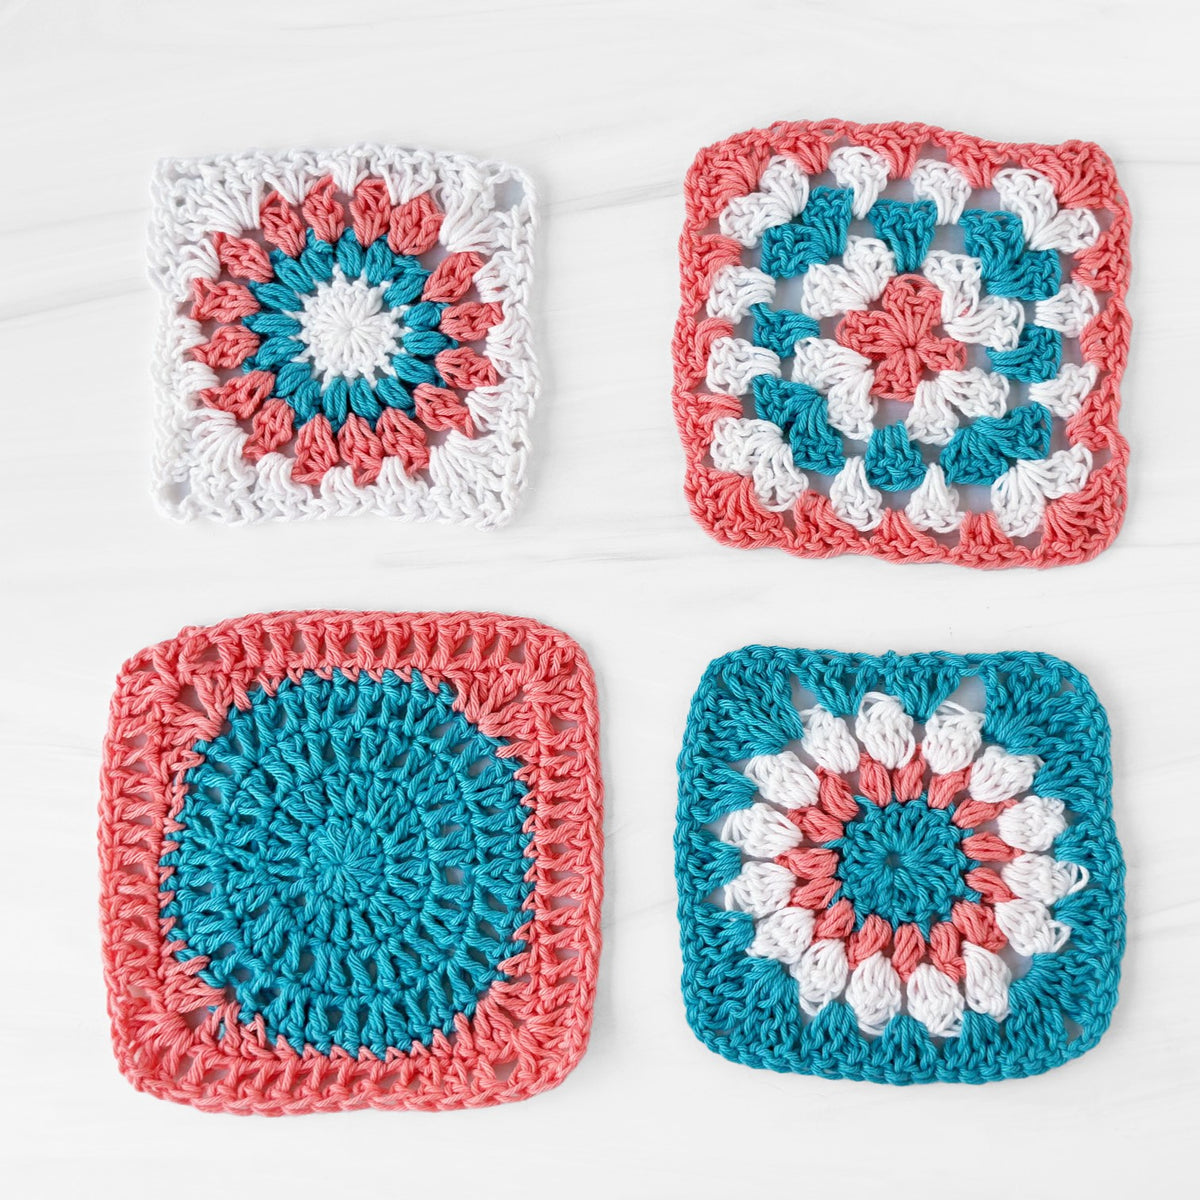 Crochet 2: Granny Squares